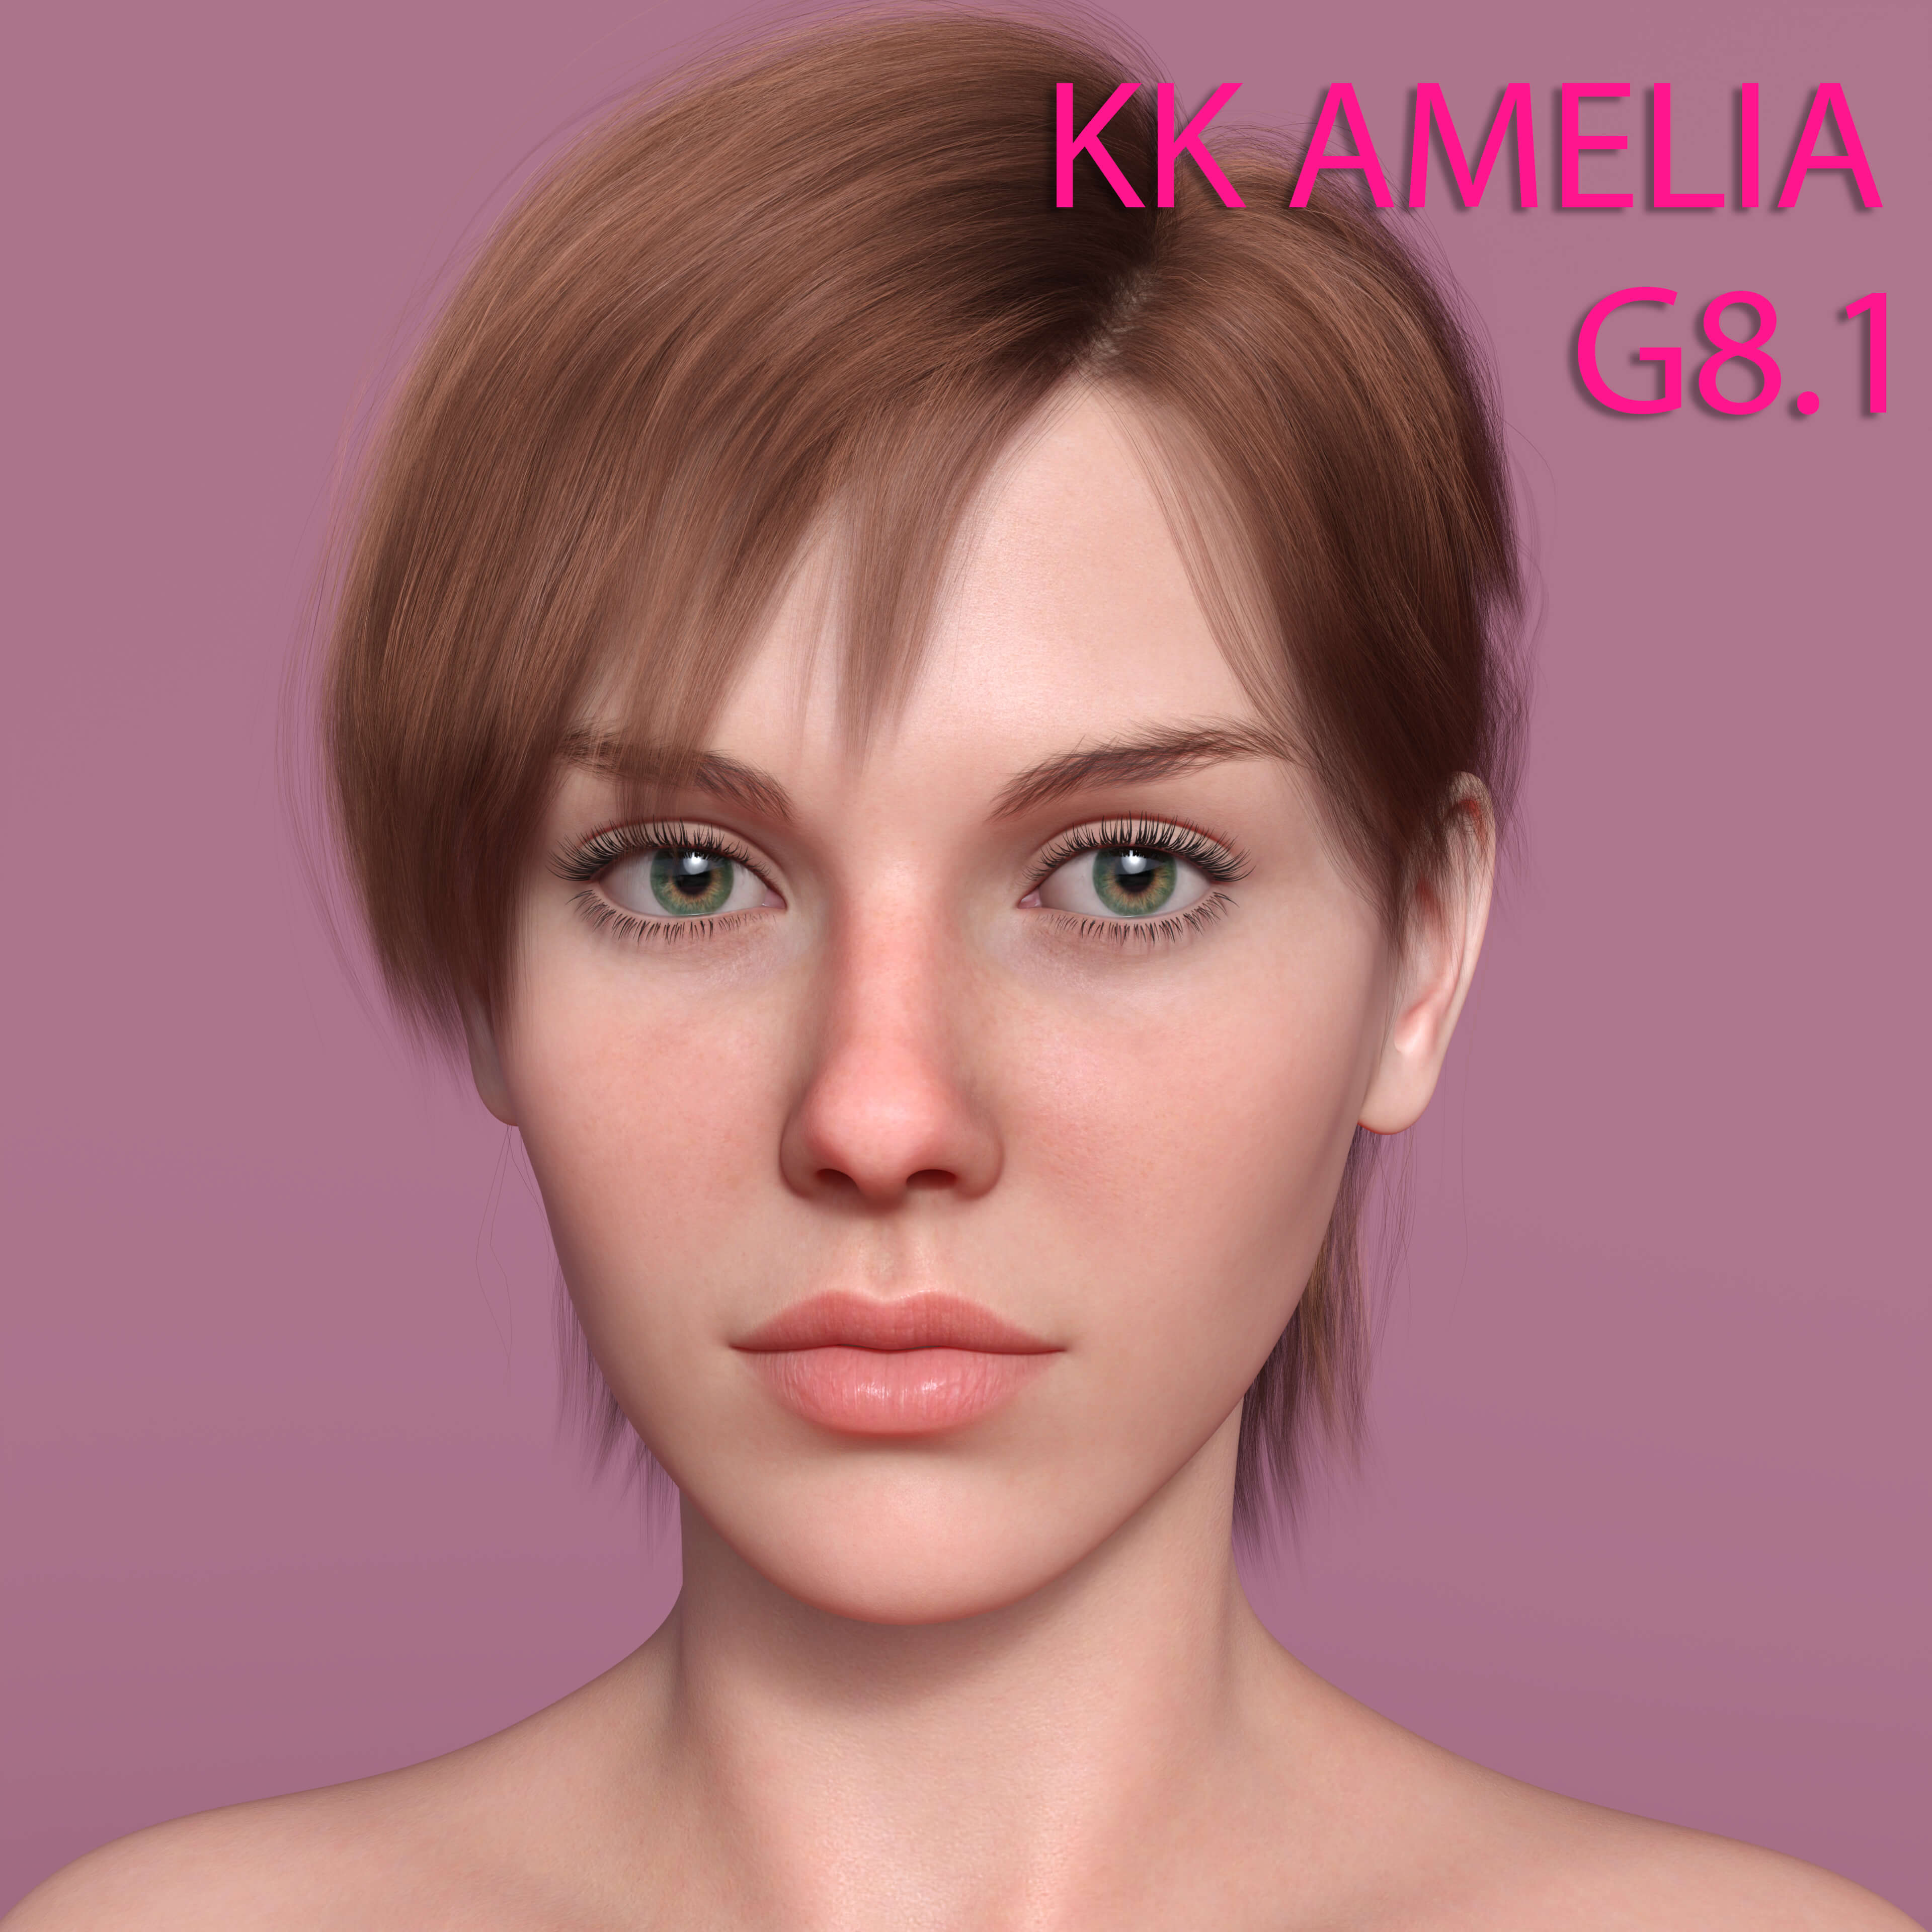 kk amelia character for genesis 88 1 female 02beede59870fe65fe